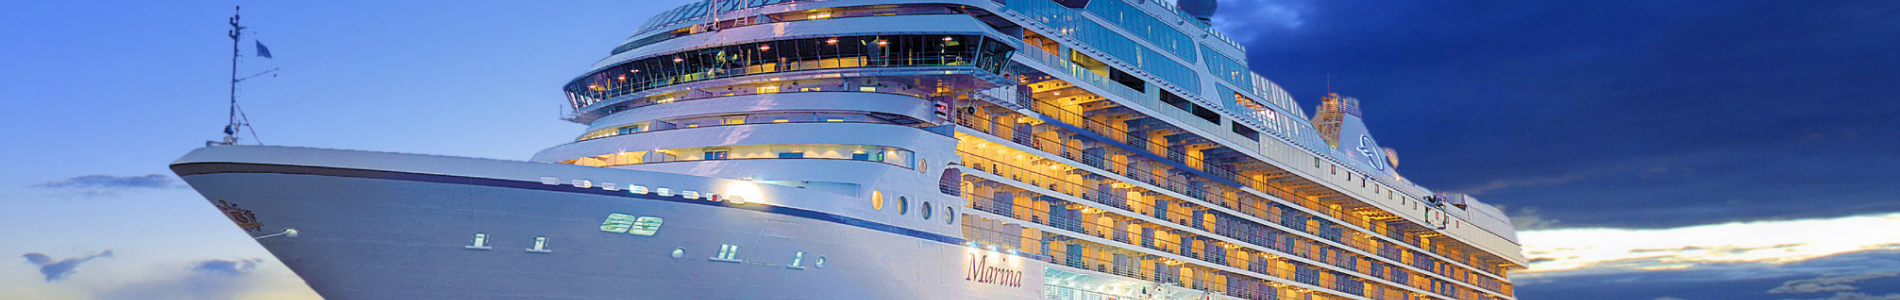 Oceania Cruises RCI cruise exchange program